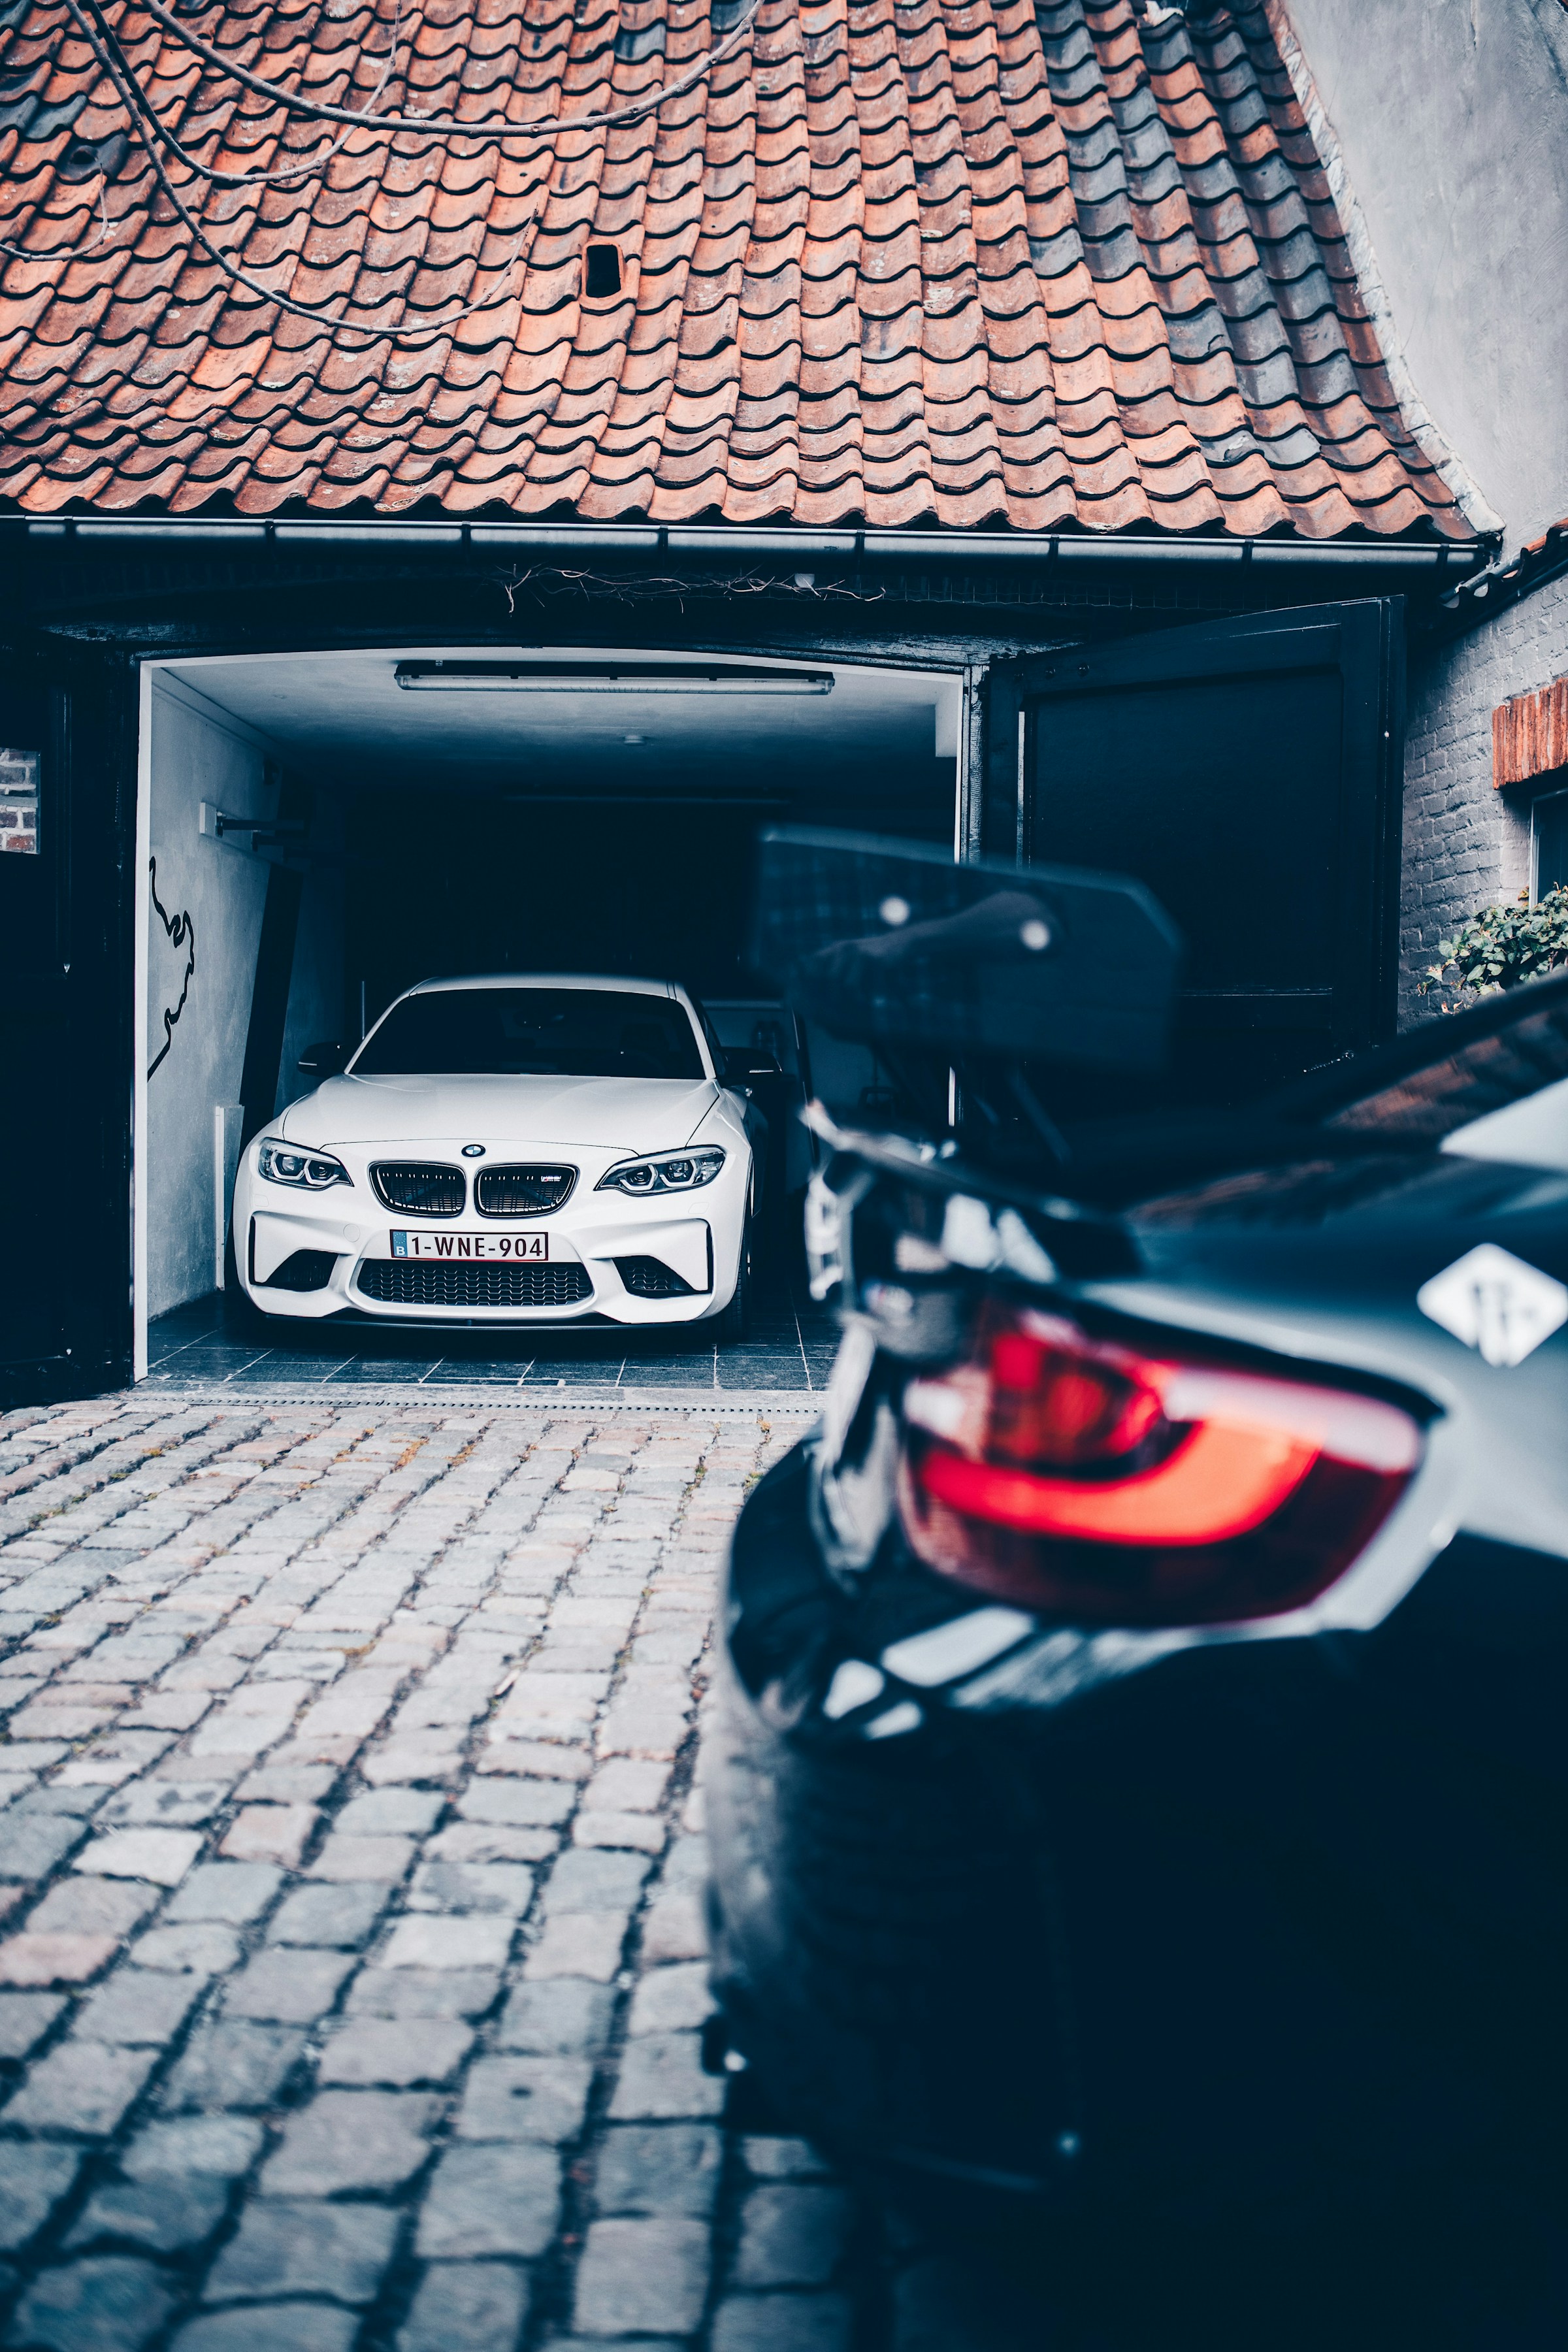 Une voiture dans un garage | Source : Unsplash